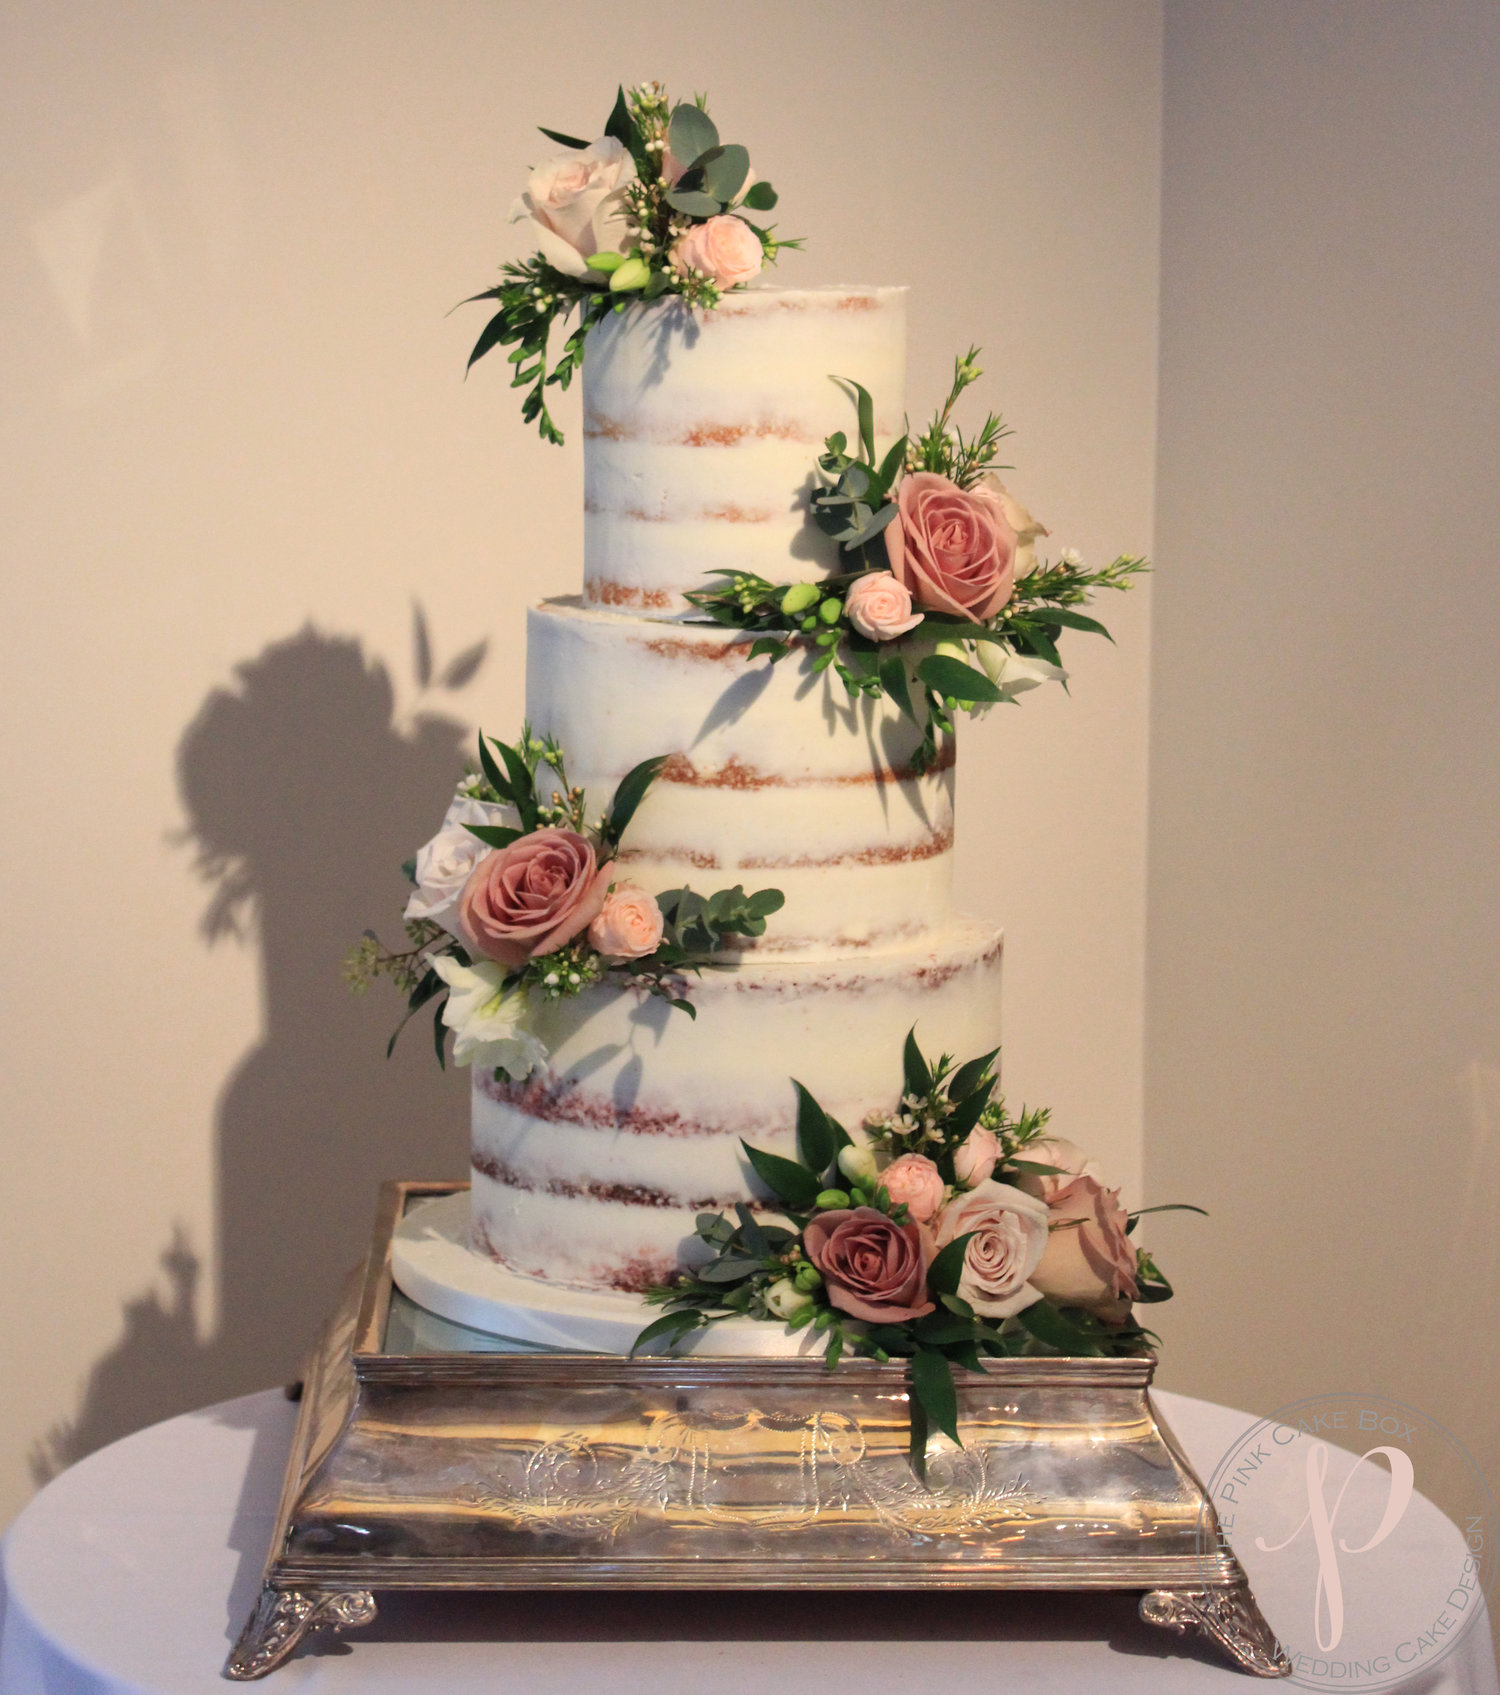 Average Price Of 3 Tier Wedding Cake - GreenStarCandy